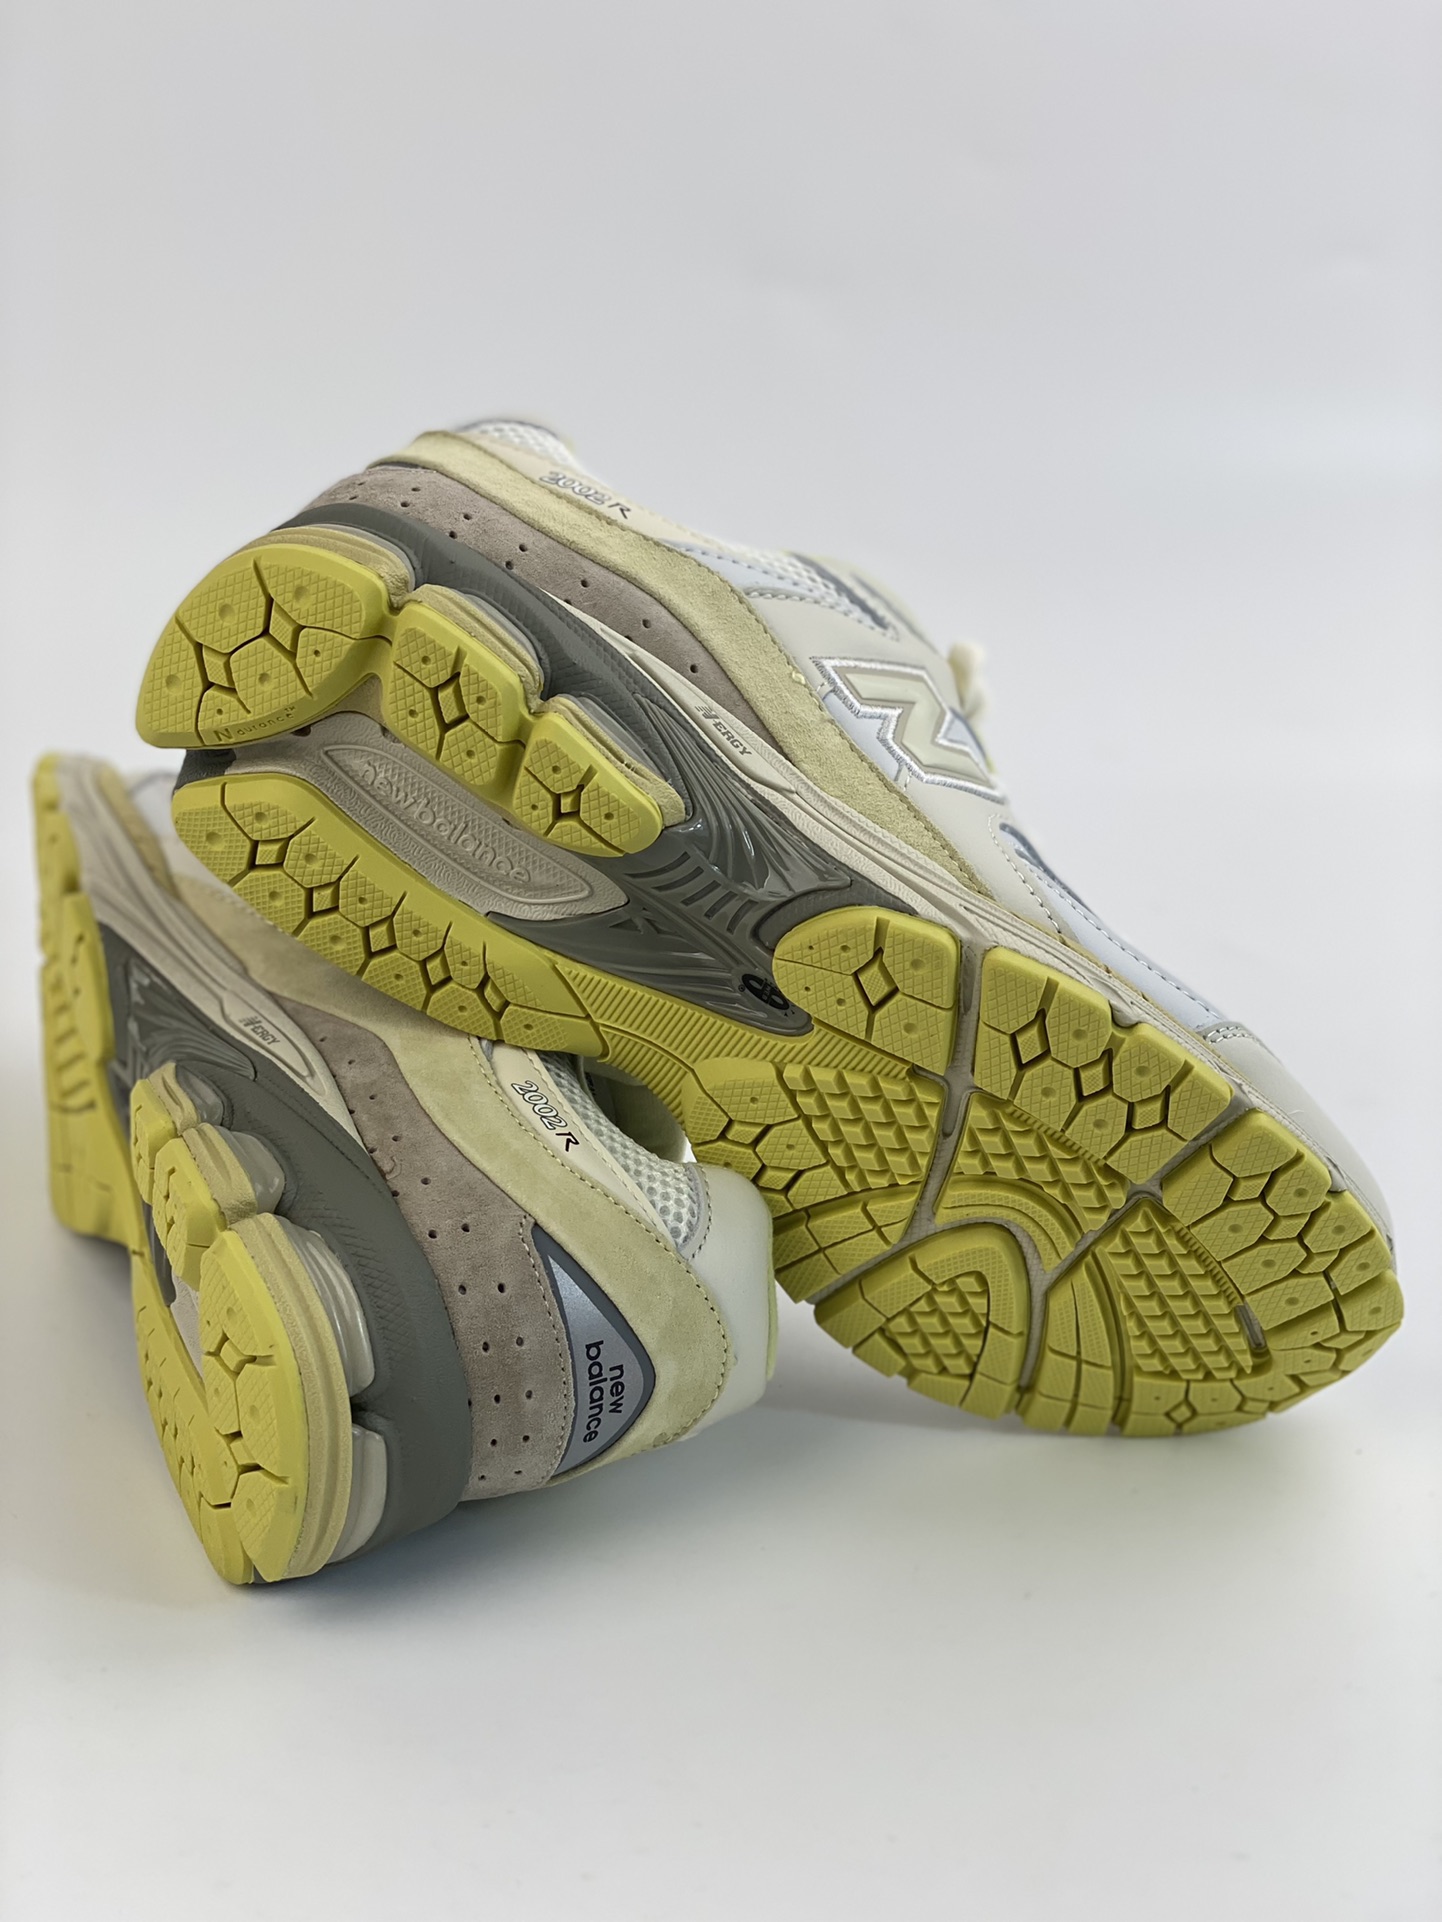 New Balance Refined Future Classic Lemon Yellow 2002 Series Retro Casual Running Shoes M2002RA1